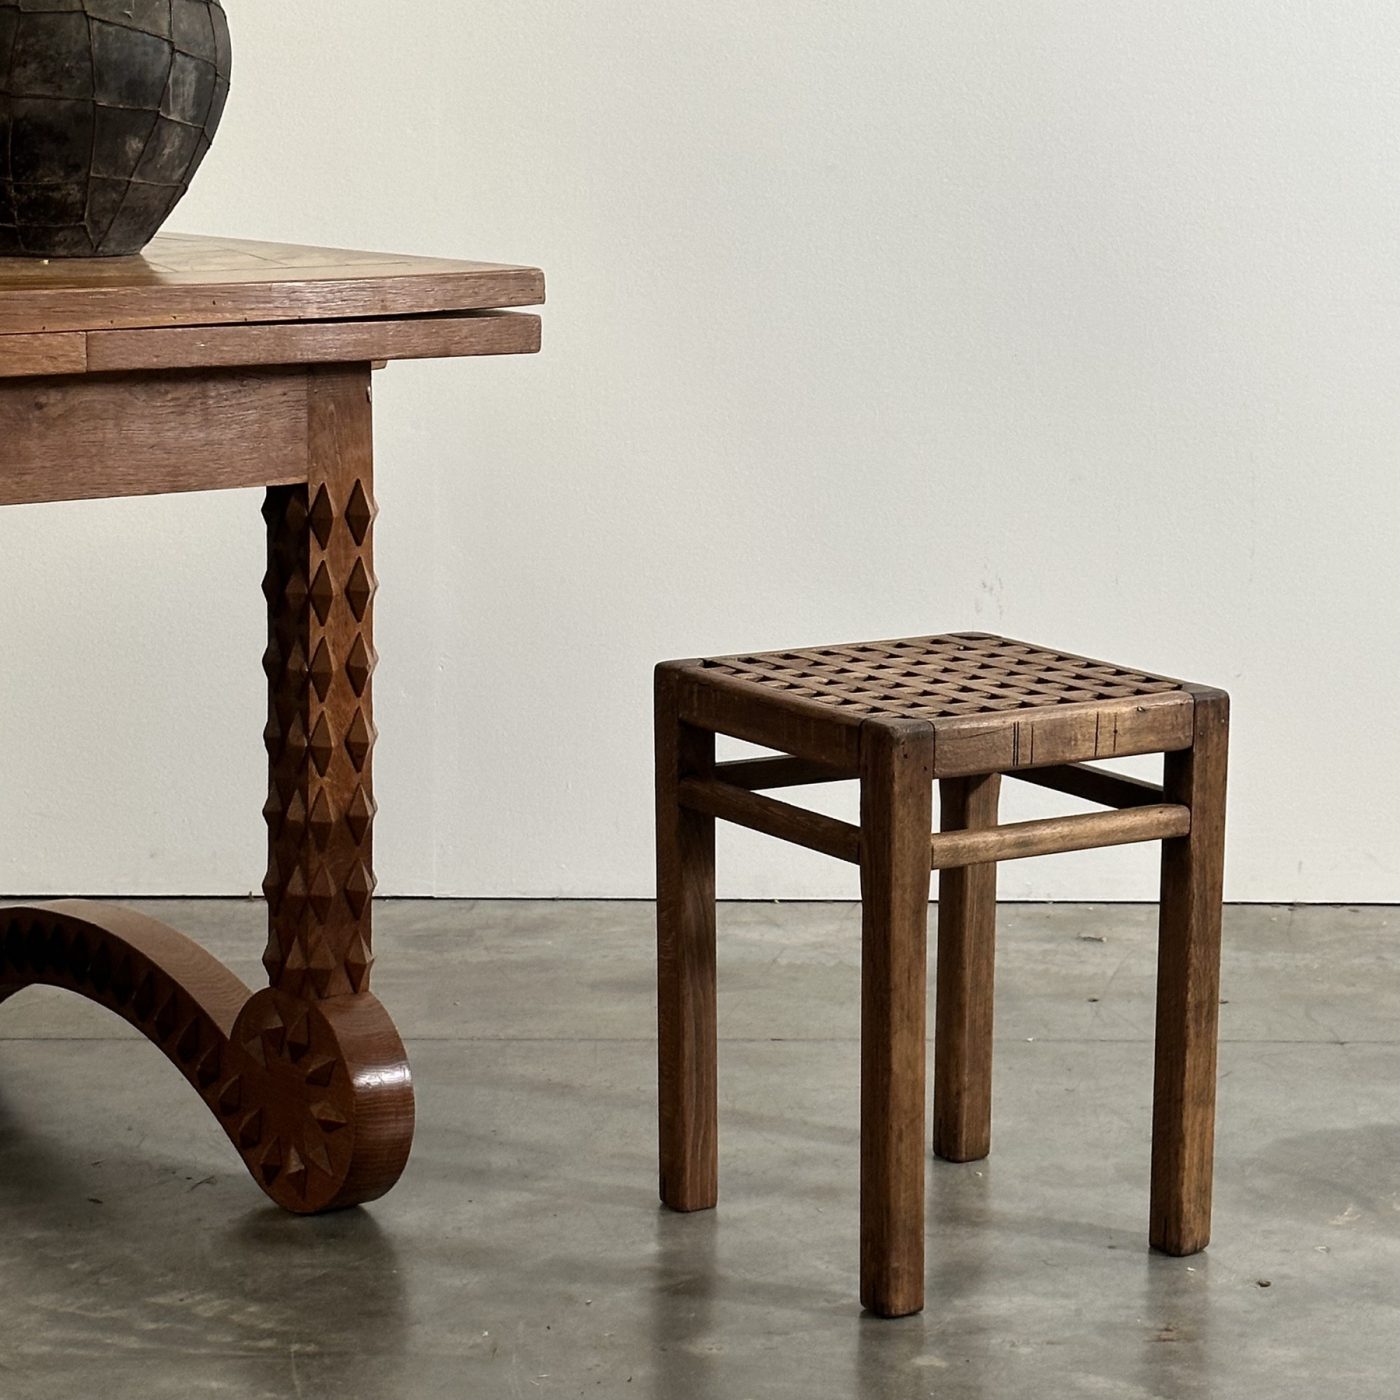 objet-vagabond-renegabriel-stool0005